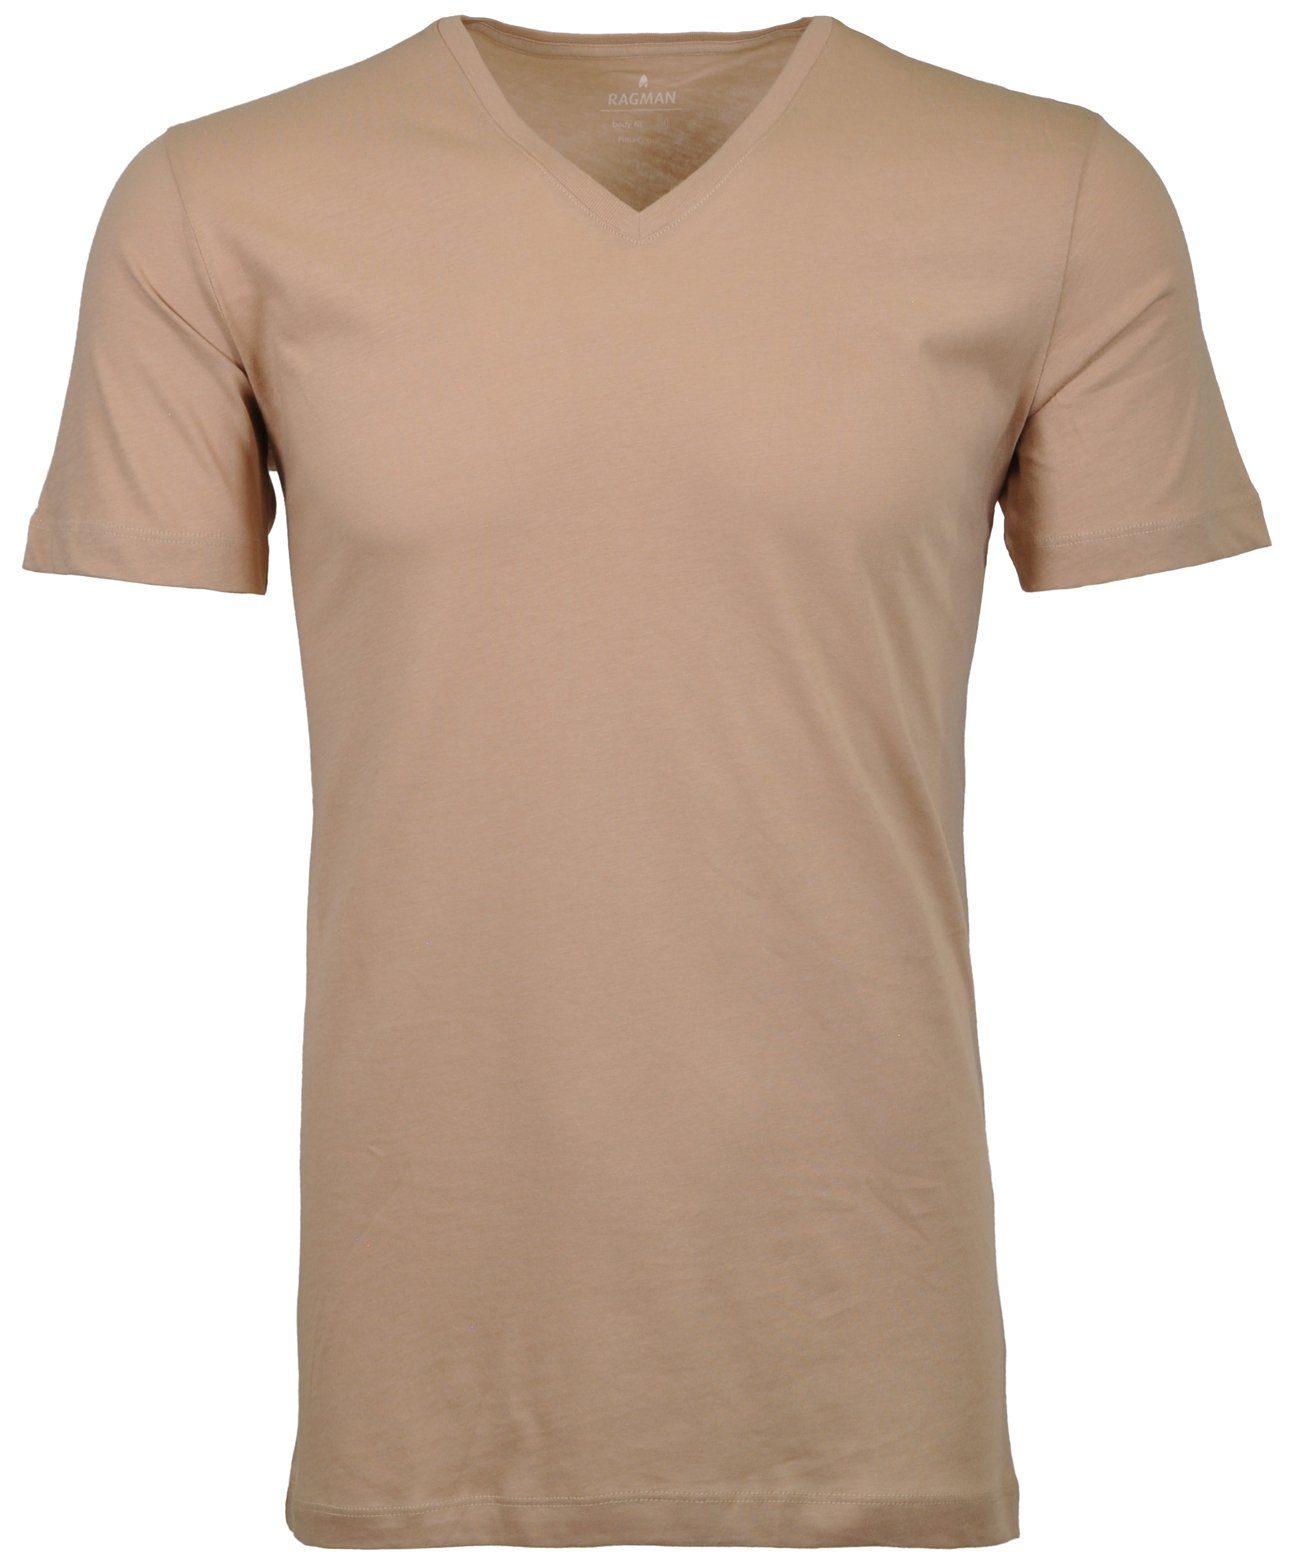 T-Shirt Light Skin-086 RAGMAN (Packung)